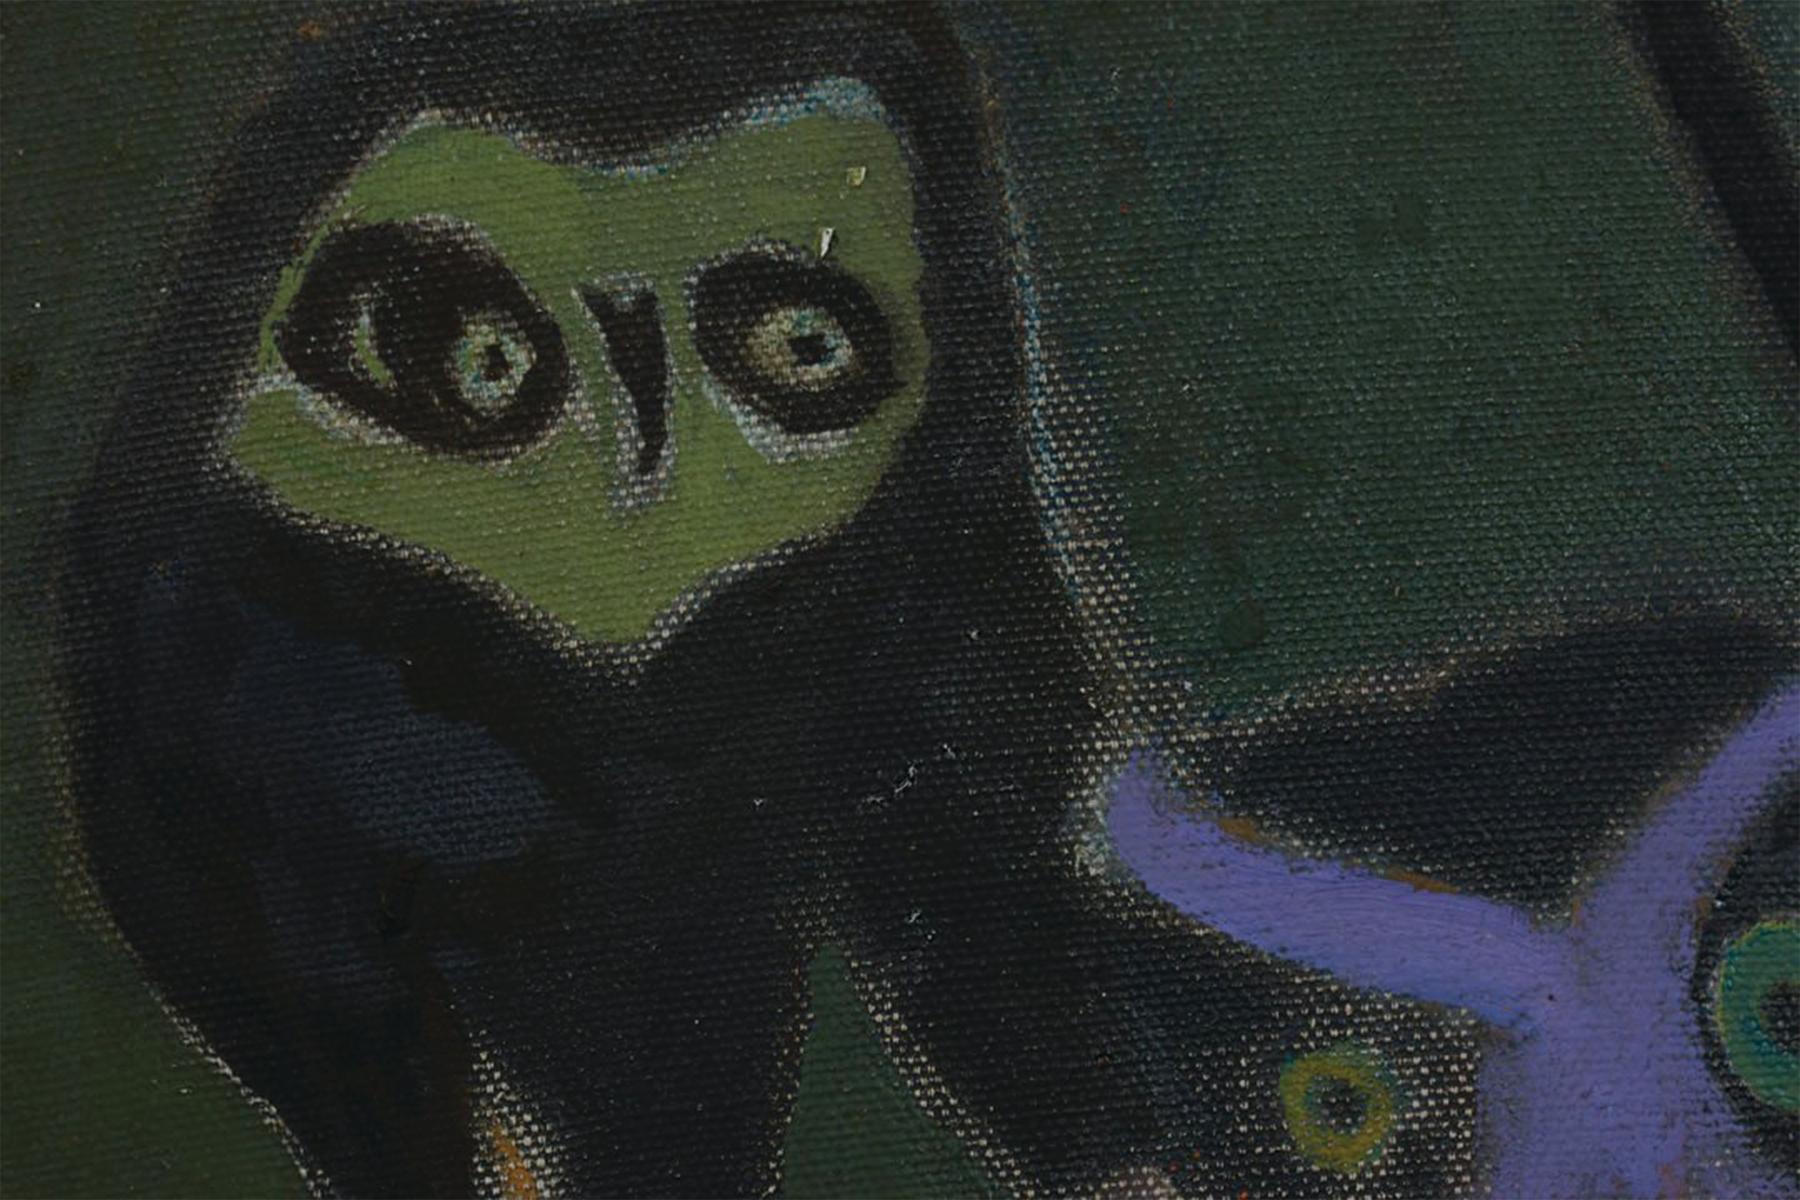 Two Owls, 20th Century Purple & Green Owls - Black Animal Painting by Joseph O'Sickey